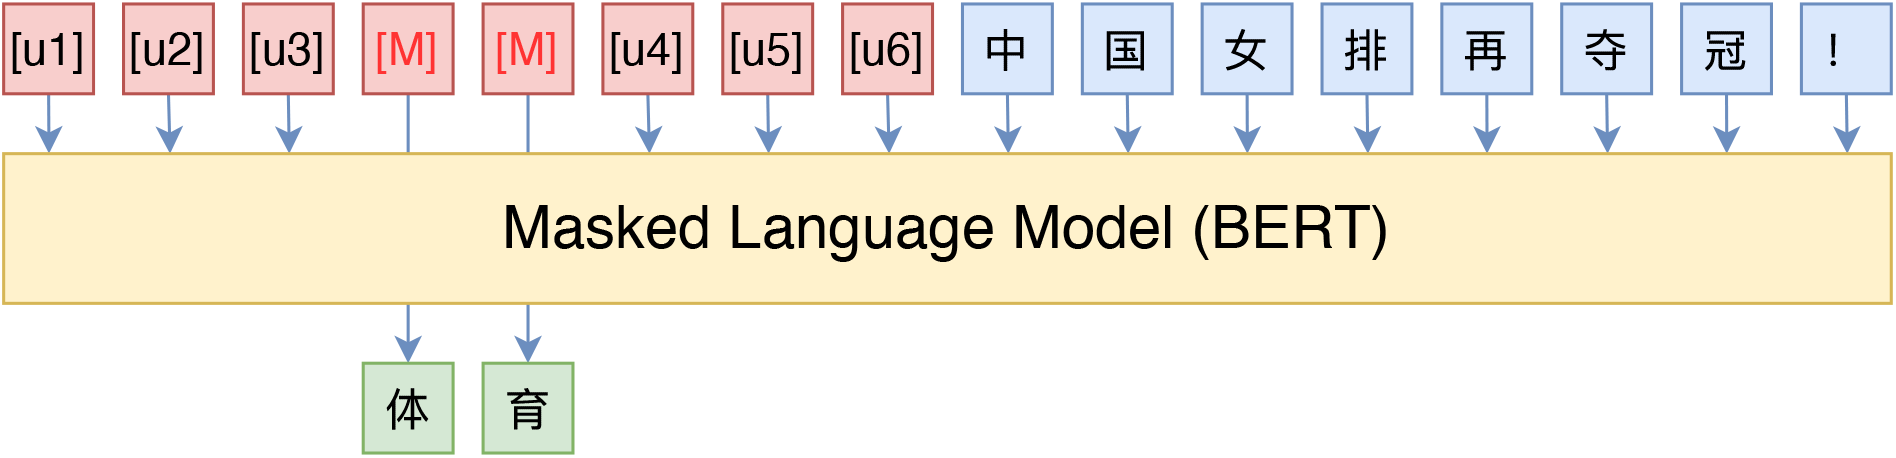 P-tuning直接使用[unused*]的token来构建模版，不关心模版的自然语言性